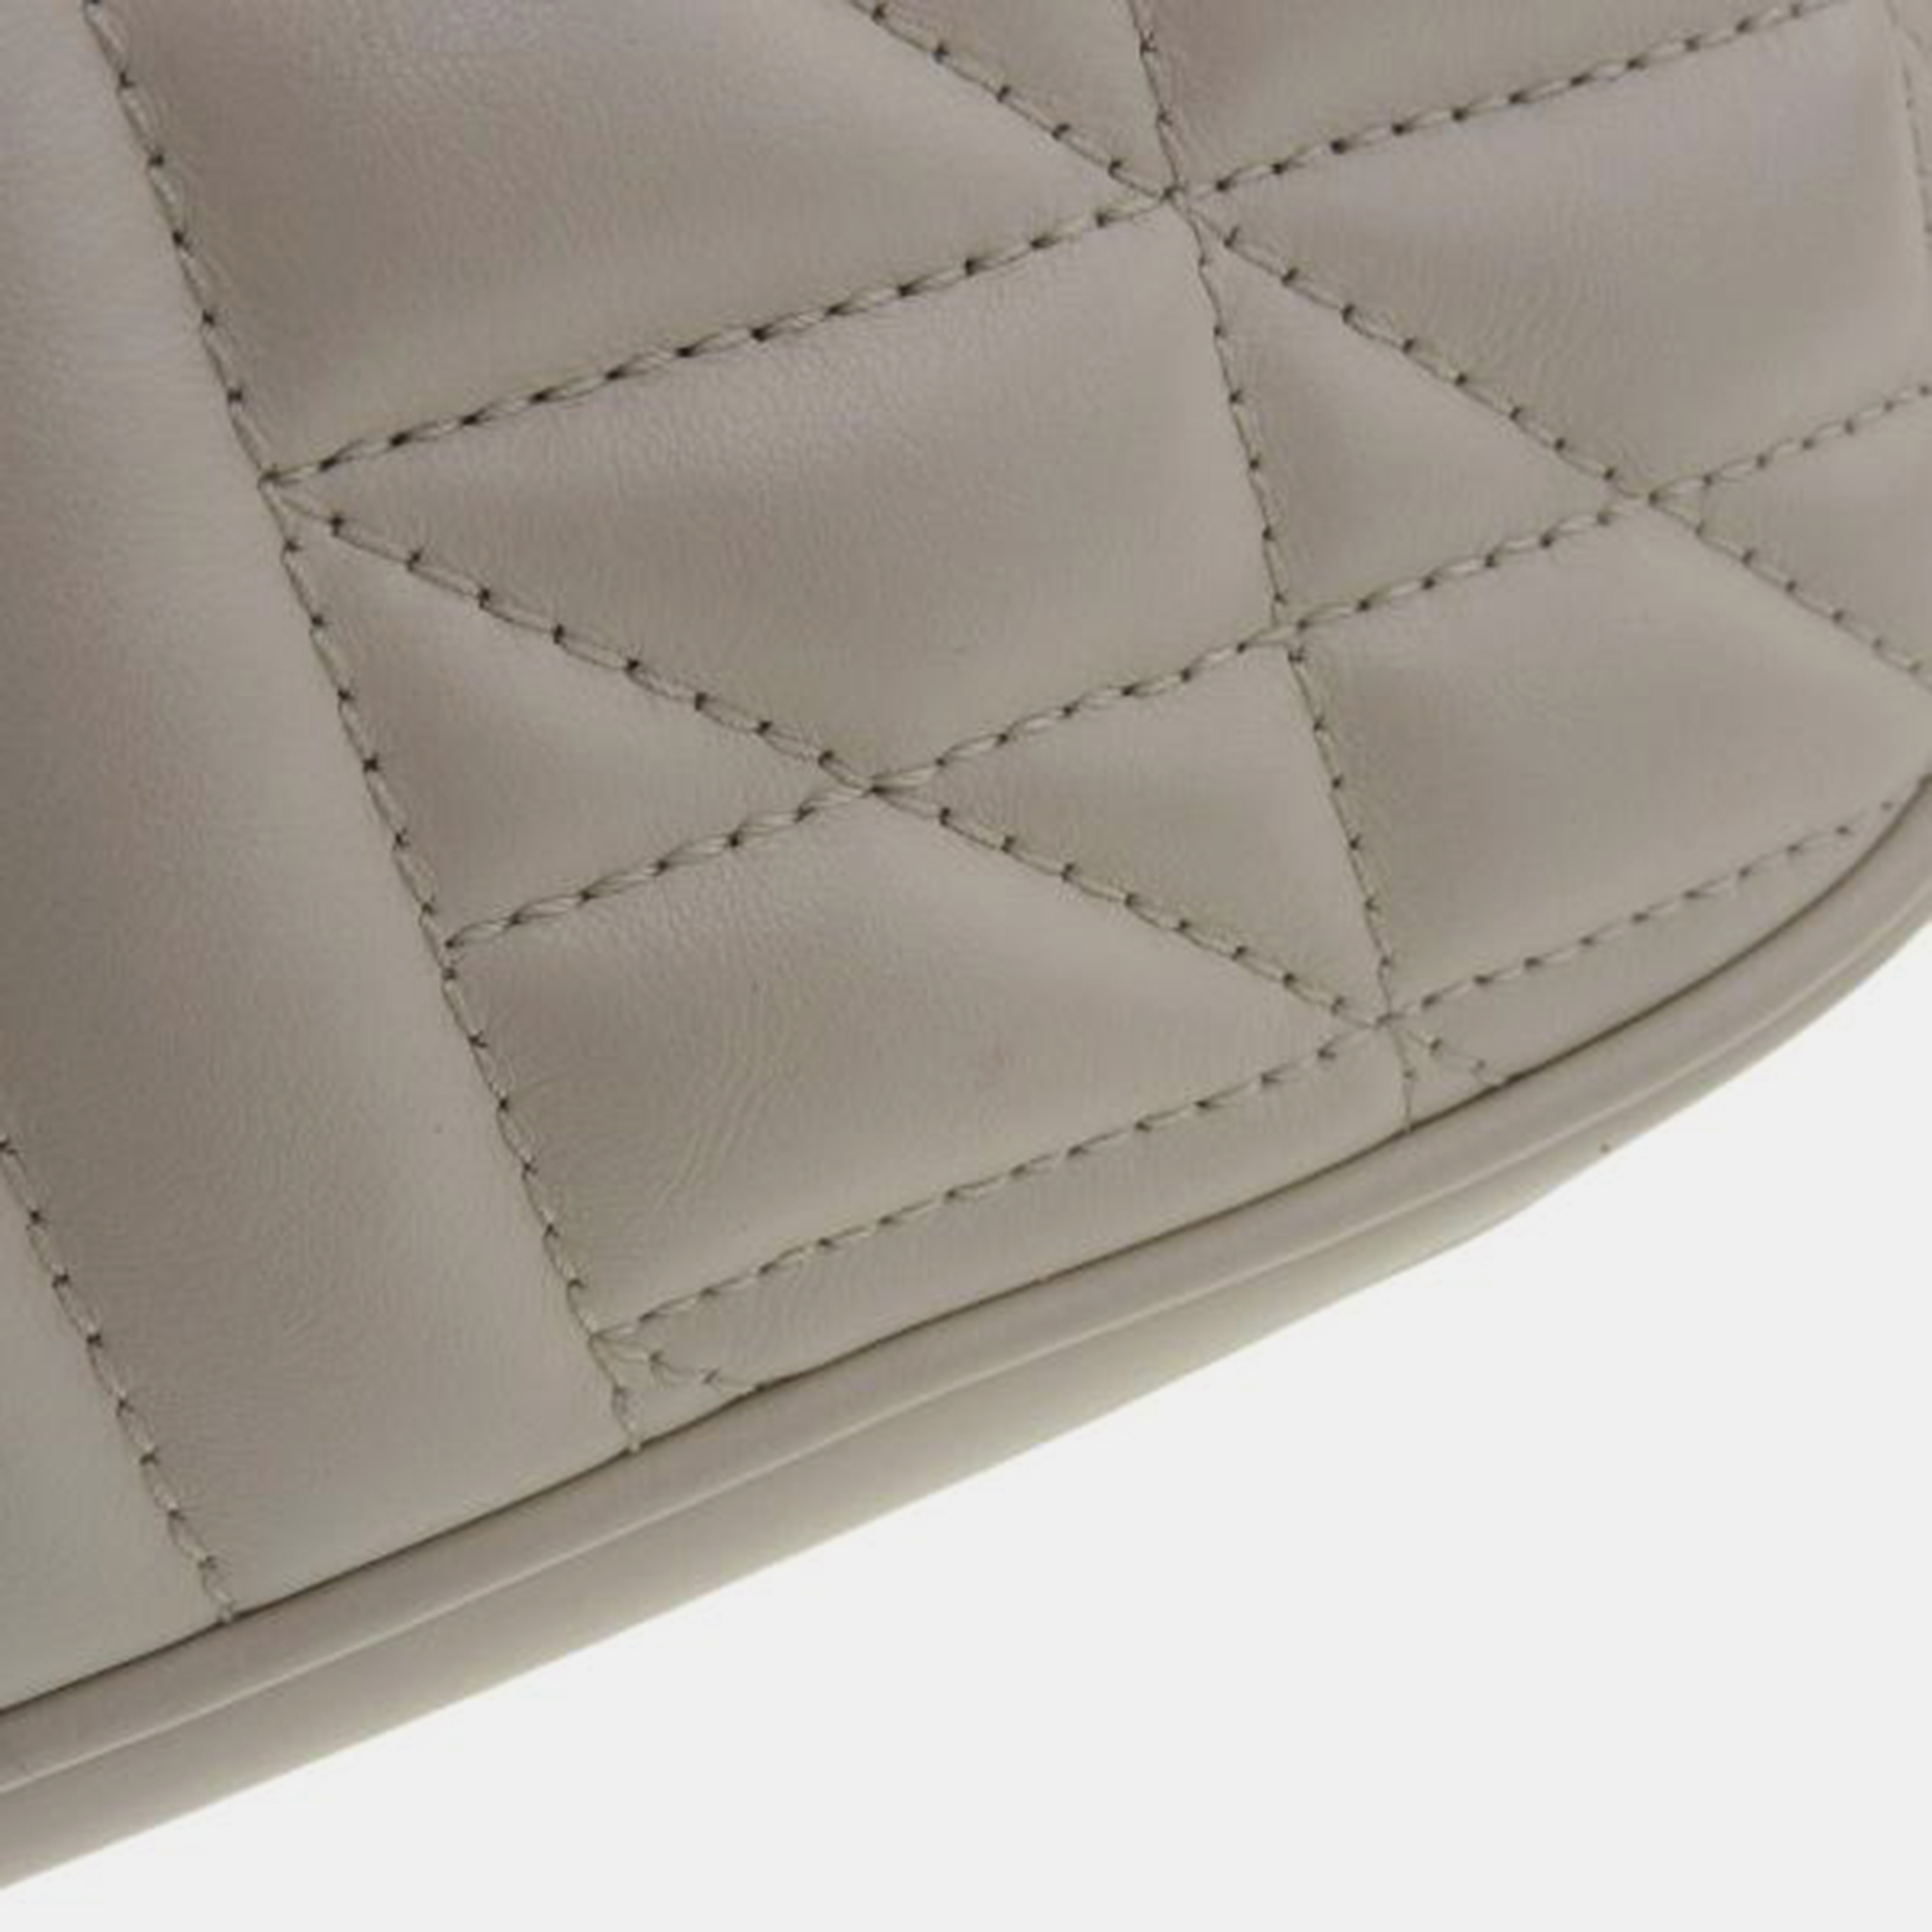 Gucci Cream Leather Small Aria Marmont Matelasse Camera Bag